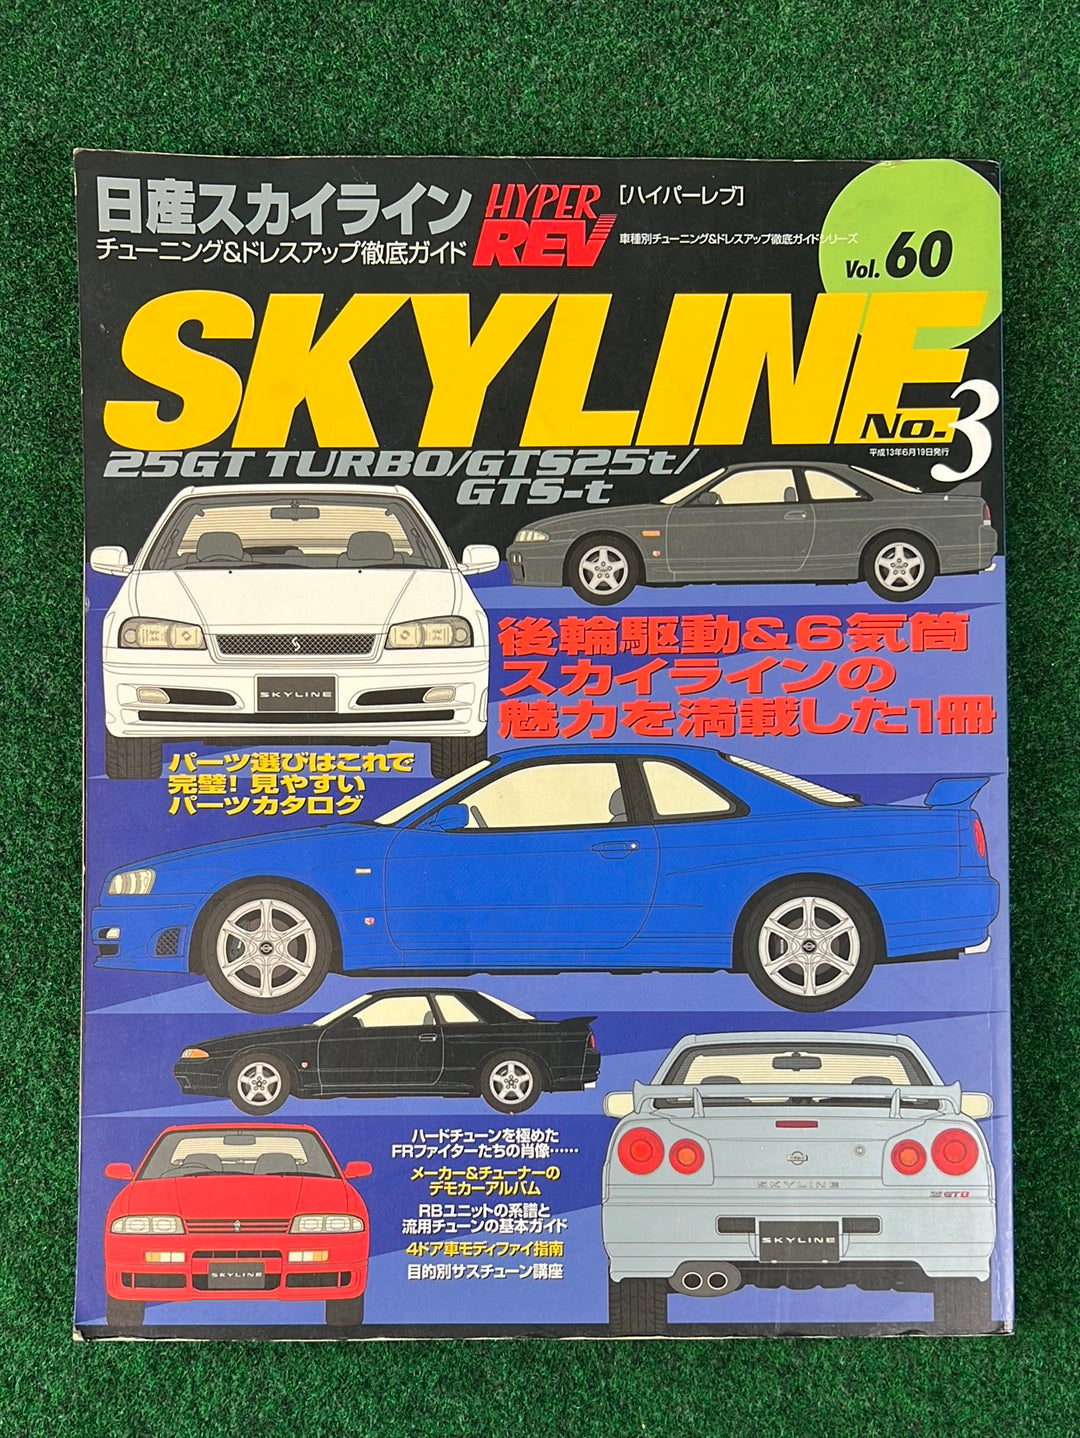 Hyper Rev Magazine - Nissan Skyline 25GT Turbo/GTS25t/GTS-T - No.3 Vol.60